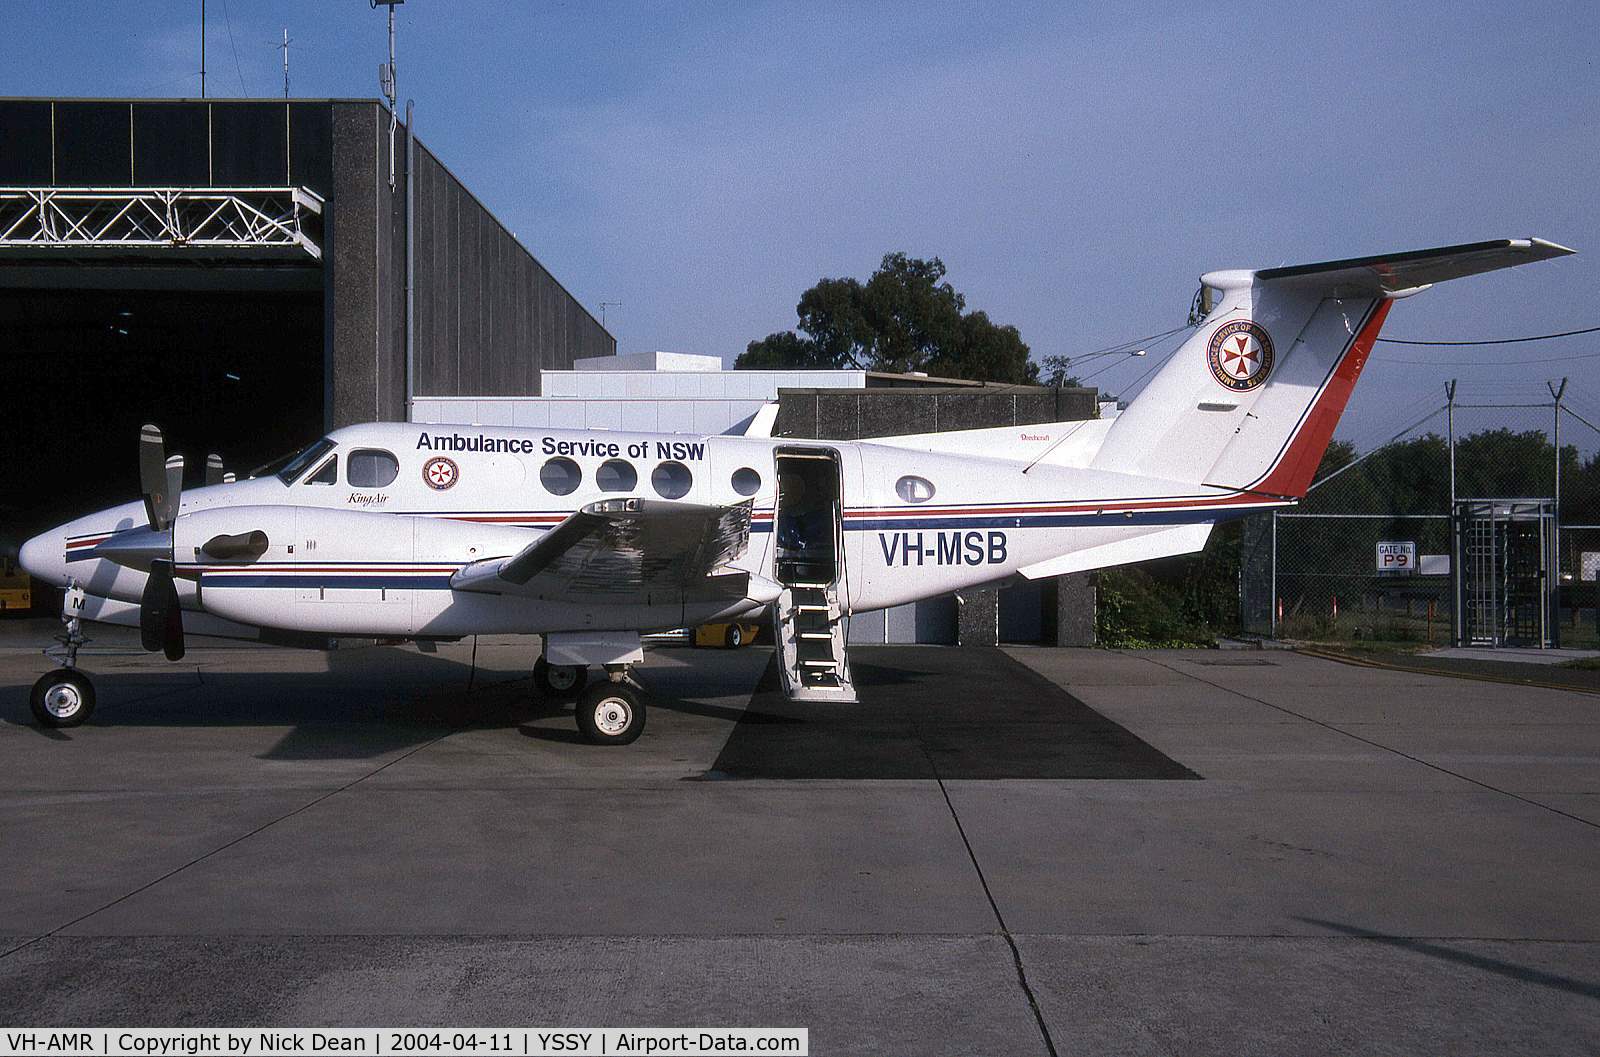 VH-AMR, 2003 Raytheon B200 King Air C/N BB-1812, YSSY (Now registered VH-AMR but seen here carrying VH-MSB)